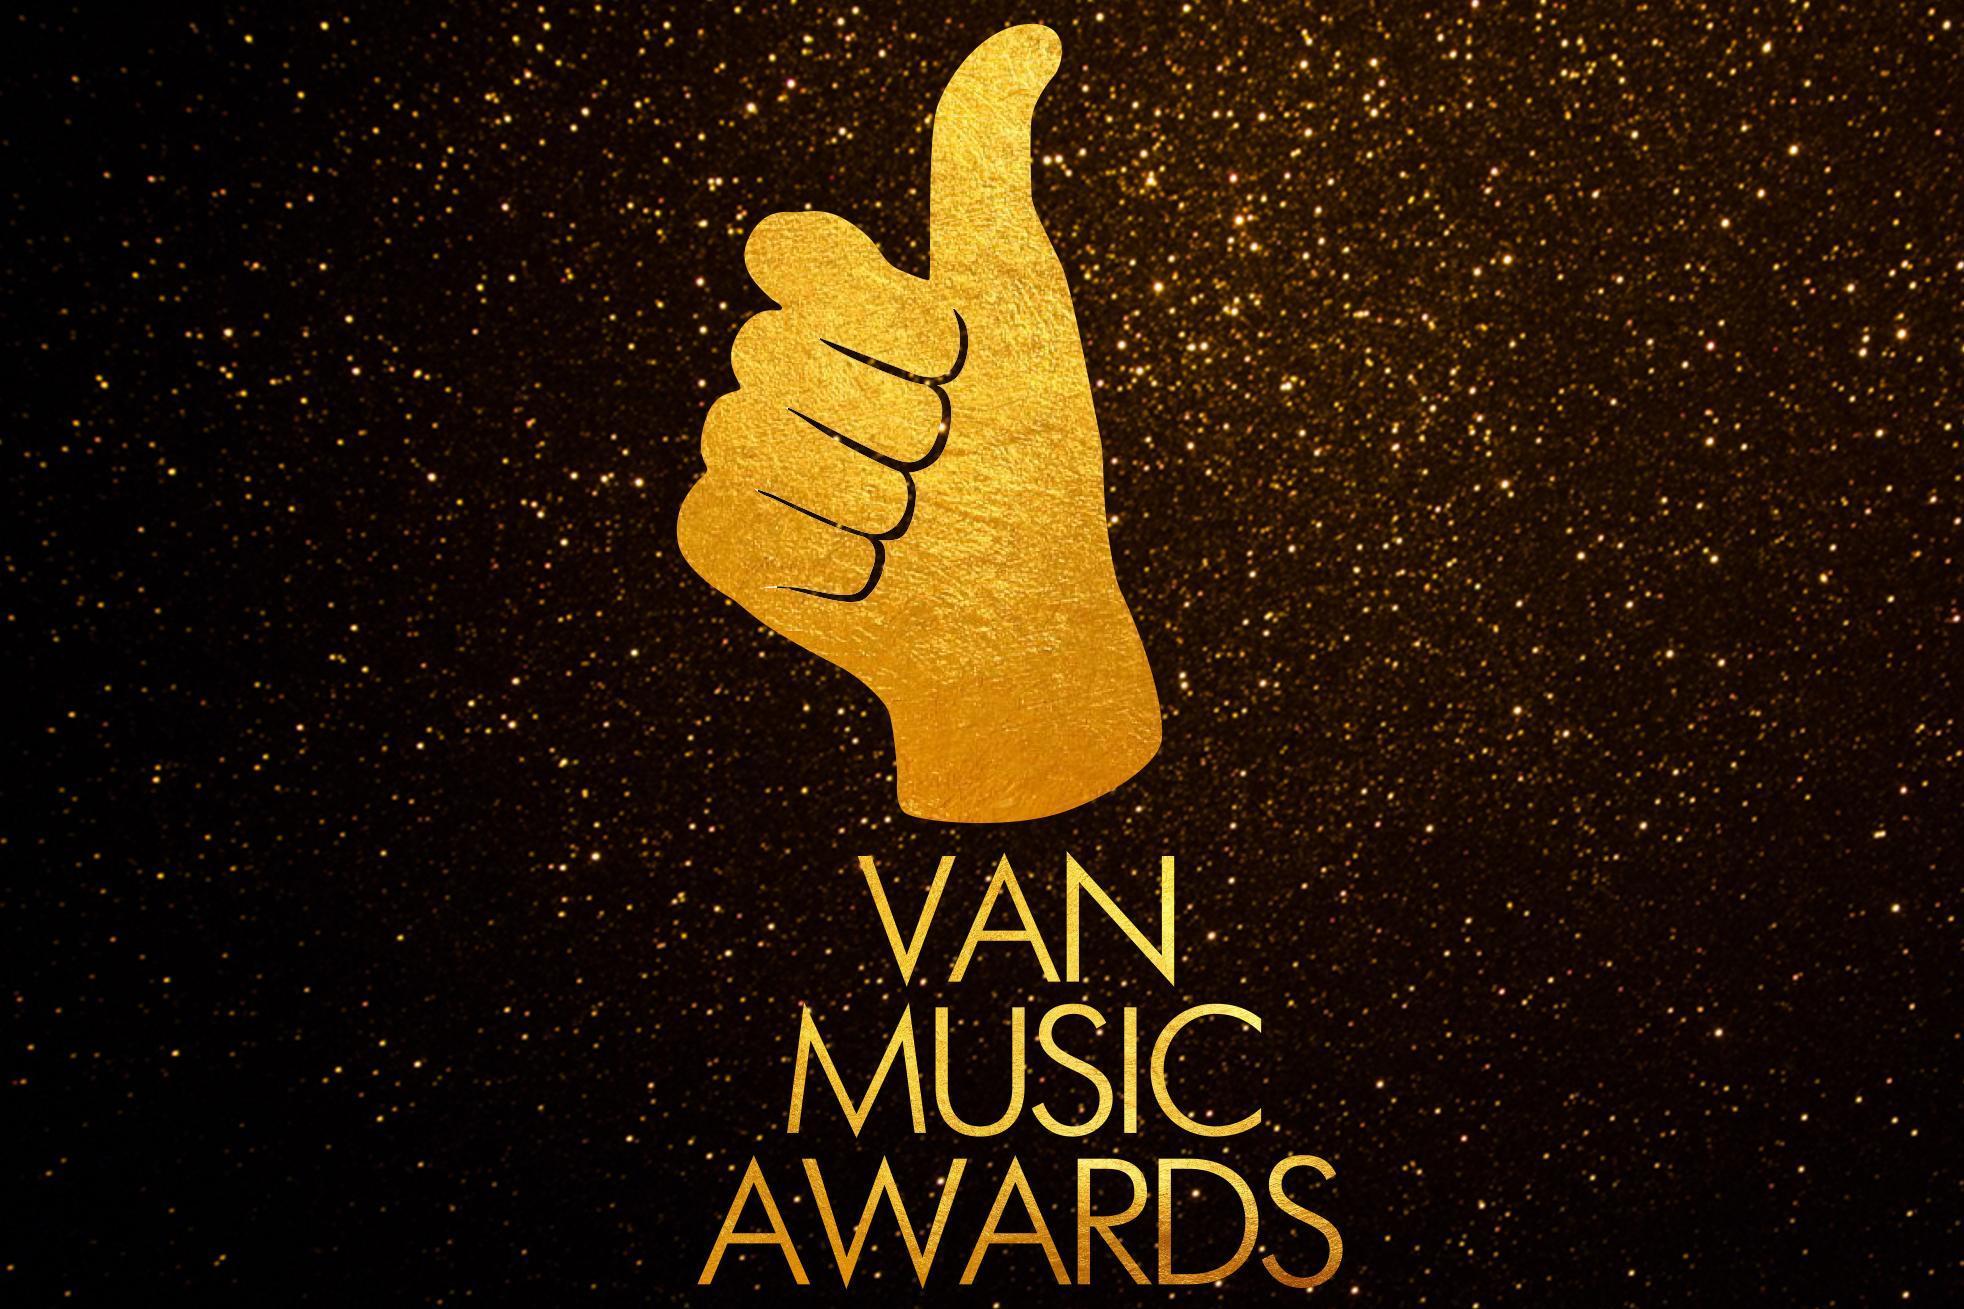 Van Music Awards 2019